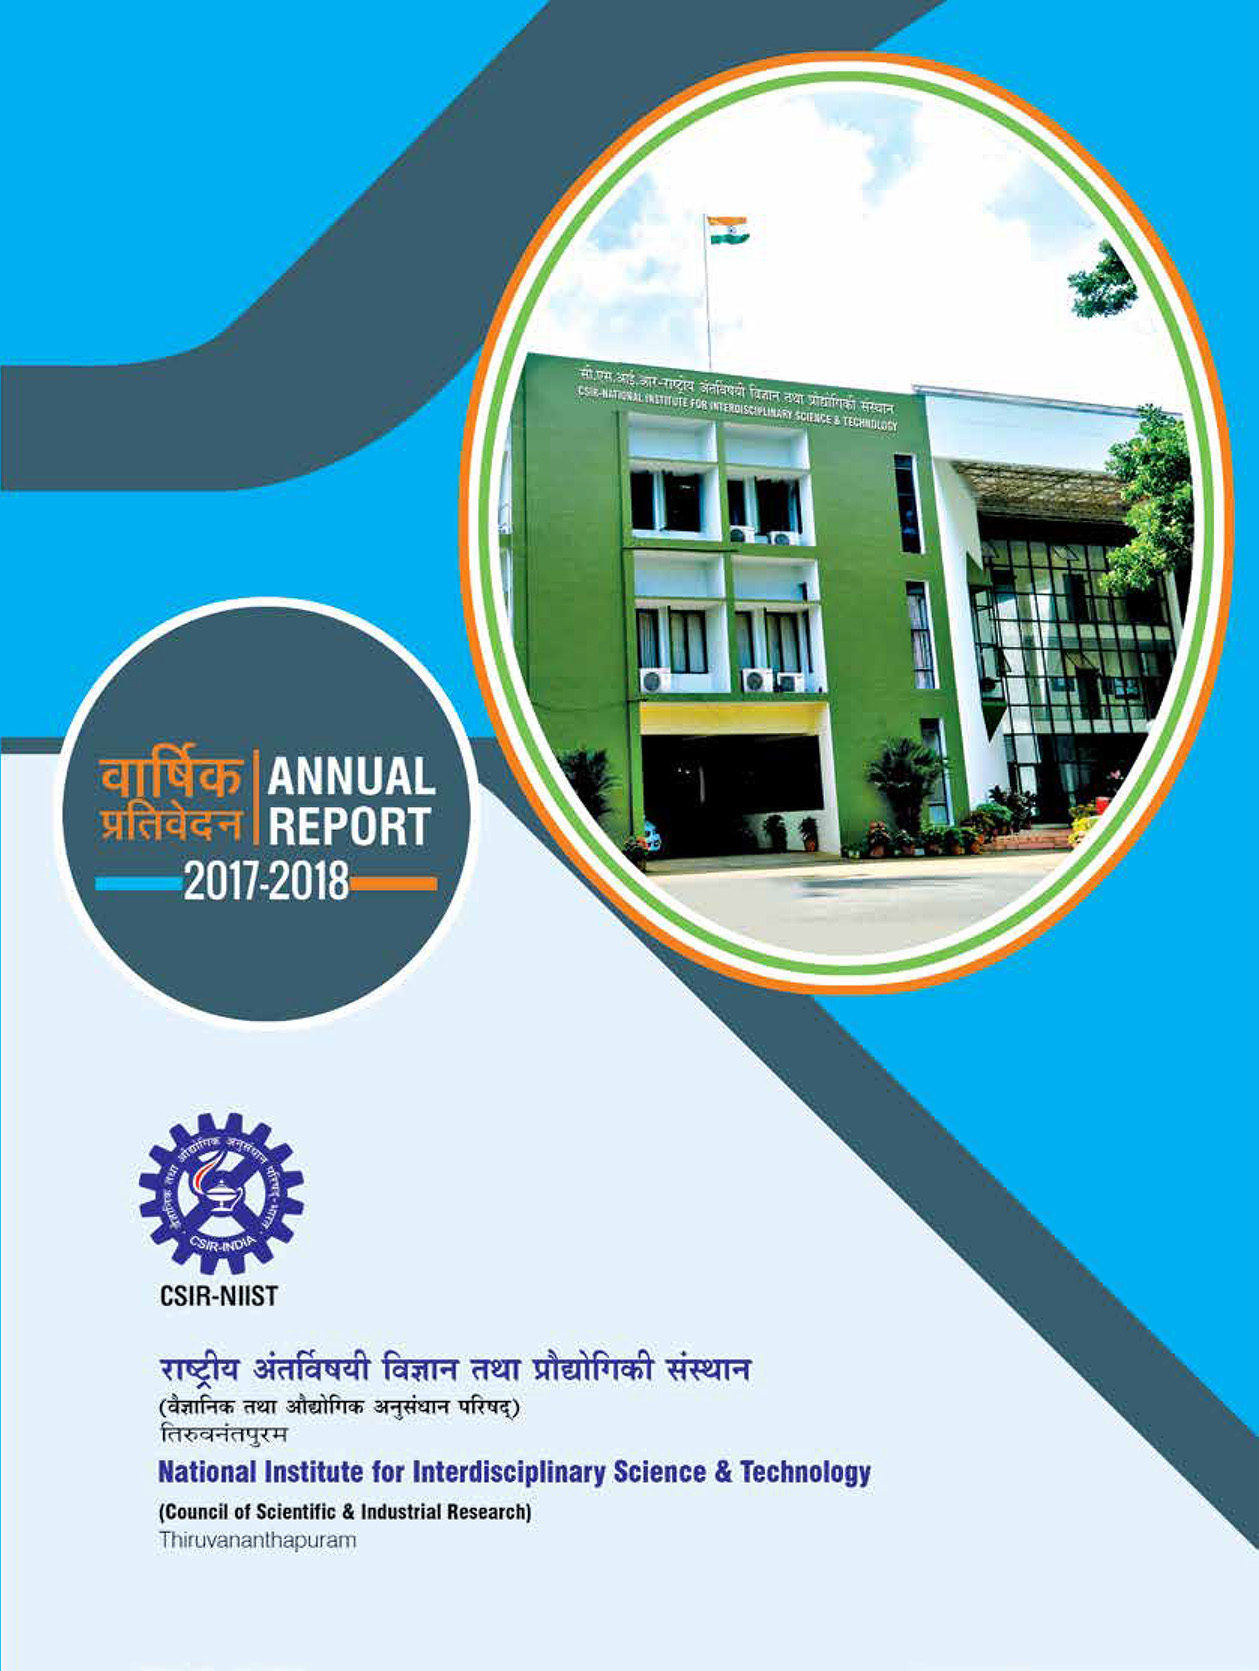 Annual Report 2017 - 2018